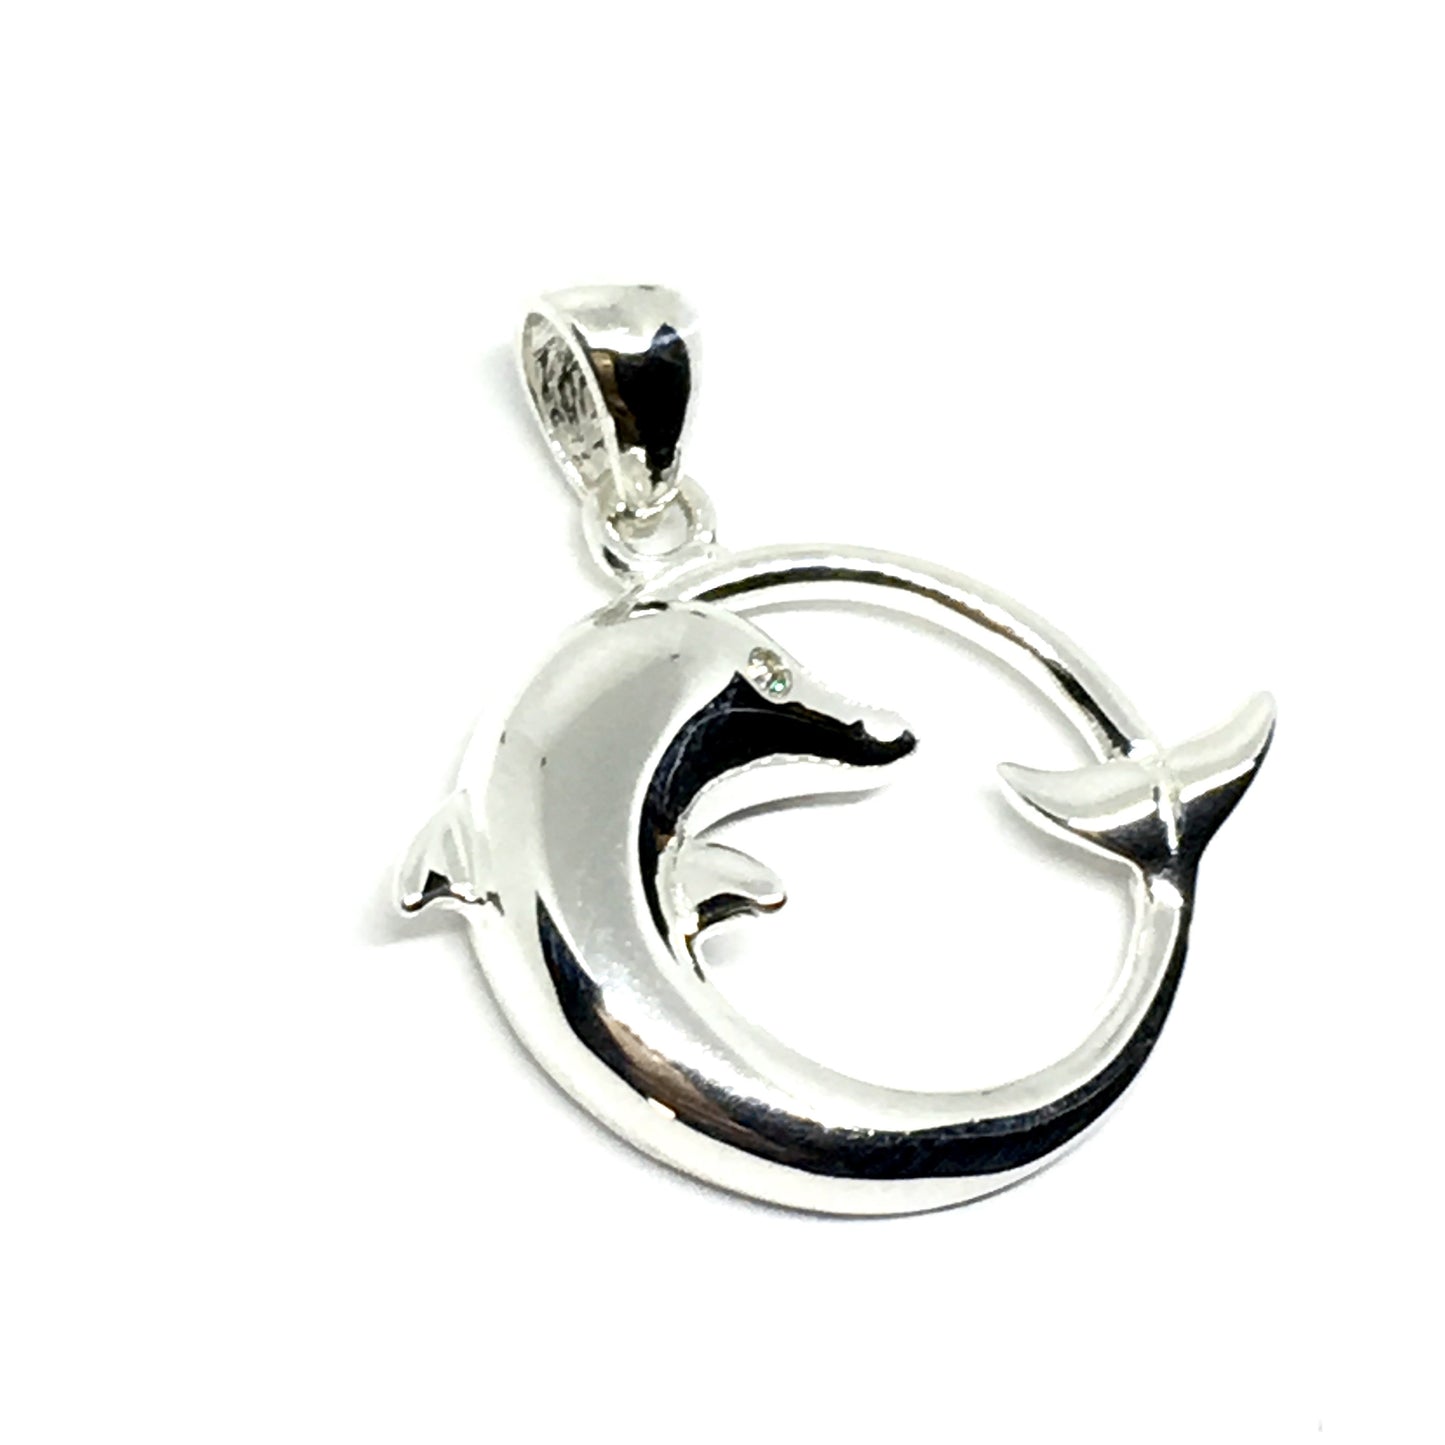 Pendant | Ocean Life Sterling Silver Sleek Sun Jumping Dolphin Charm Pendant - Beach Jewelry | Blingschlingers.com USA